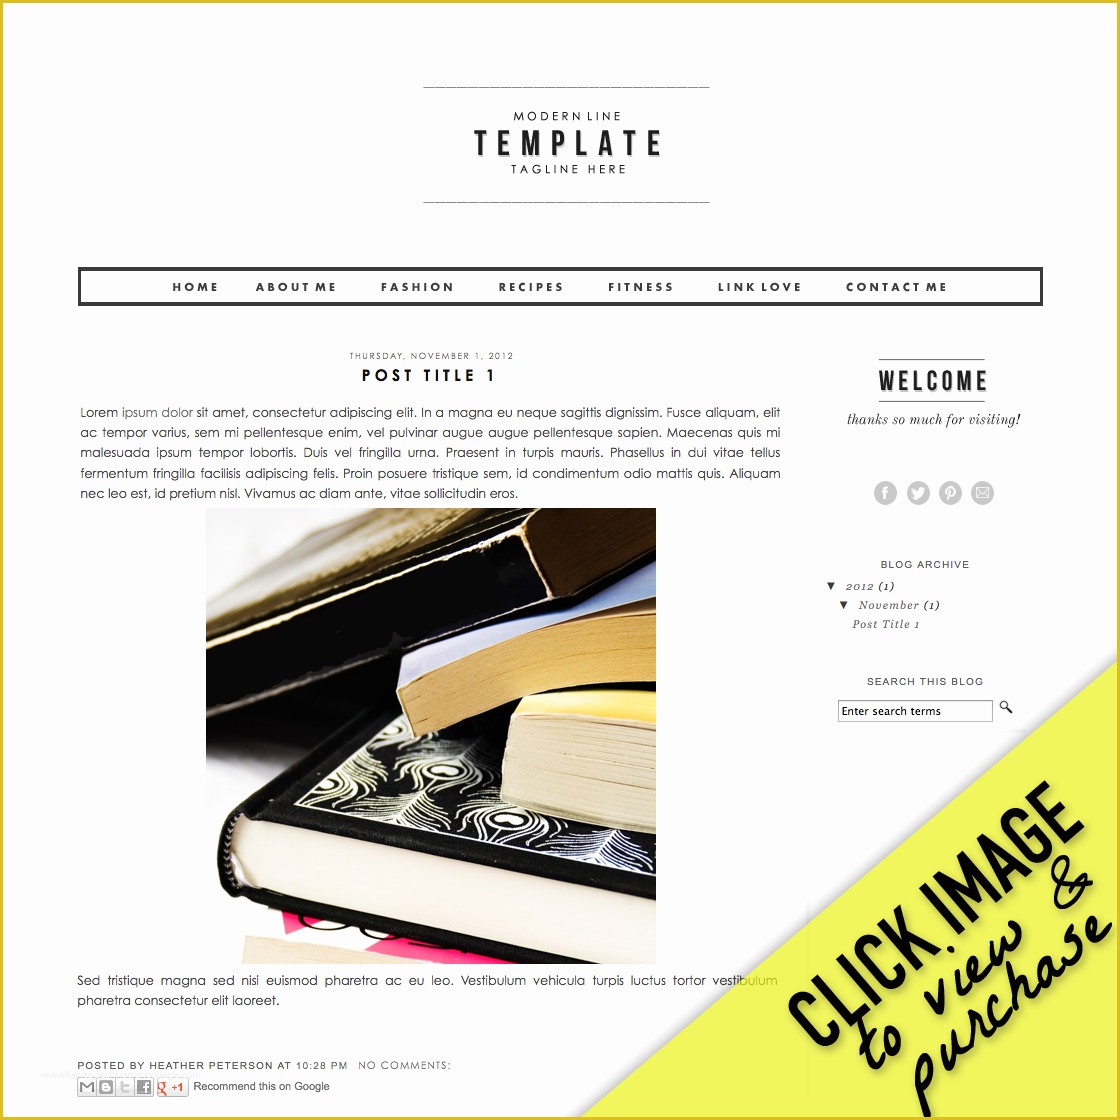 Premade Website Templates Free Of Modern Line Premade Template $115 Smitten Blog Designs